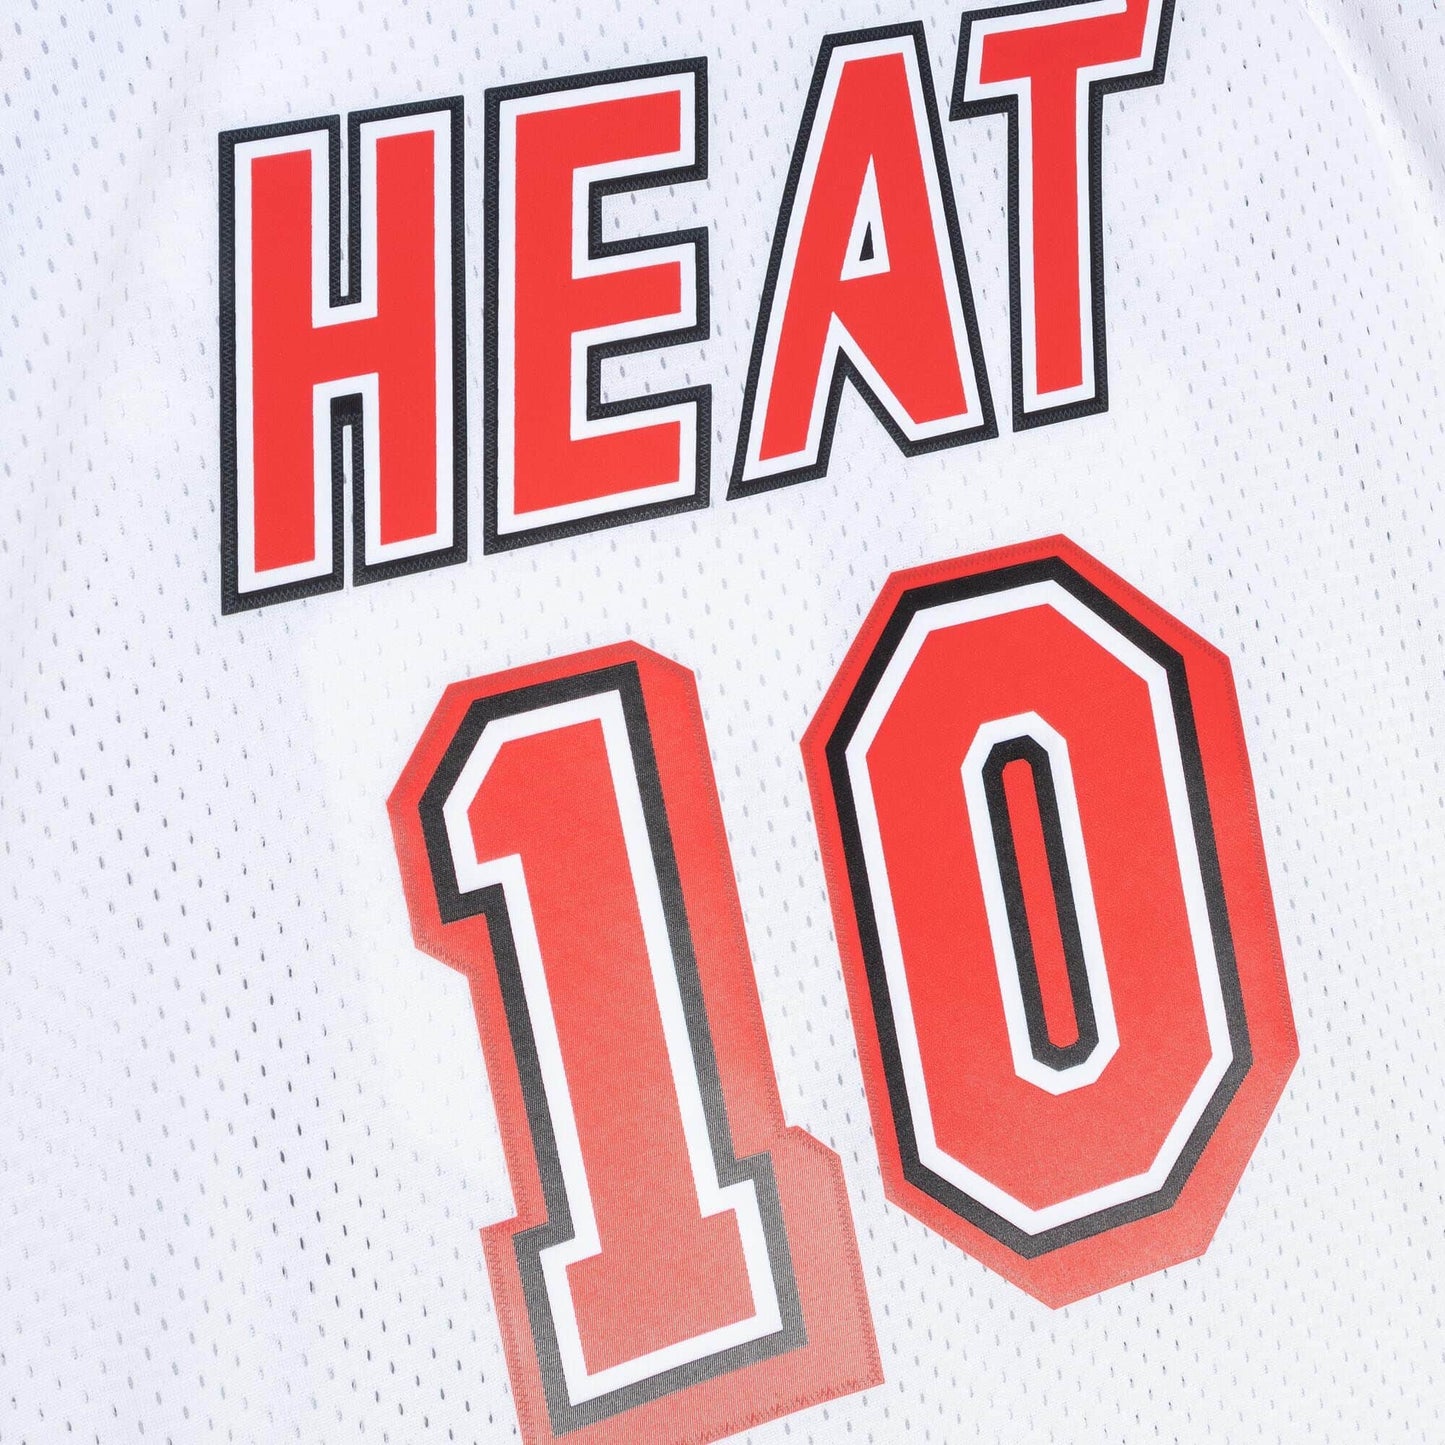 NBA Swingman Jersey Miami Heat 1996-97 Tim Hardaway